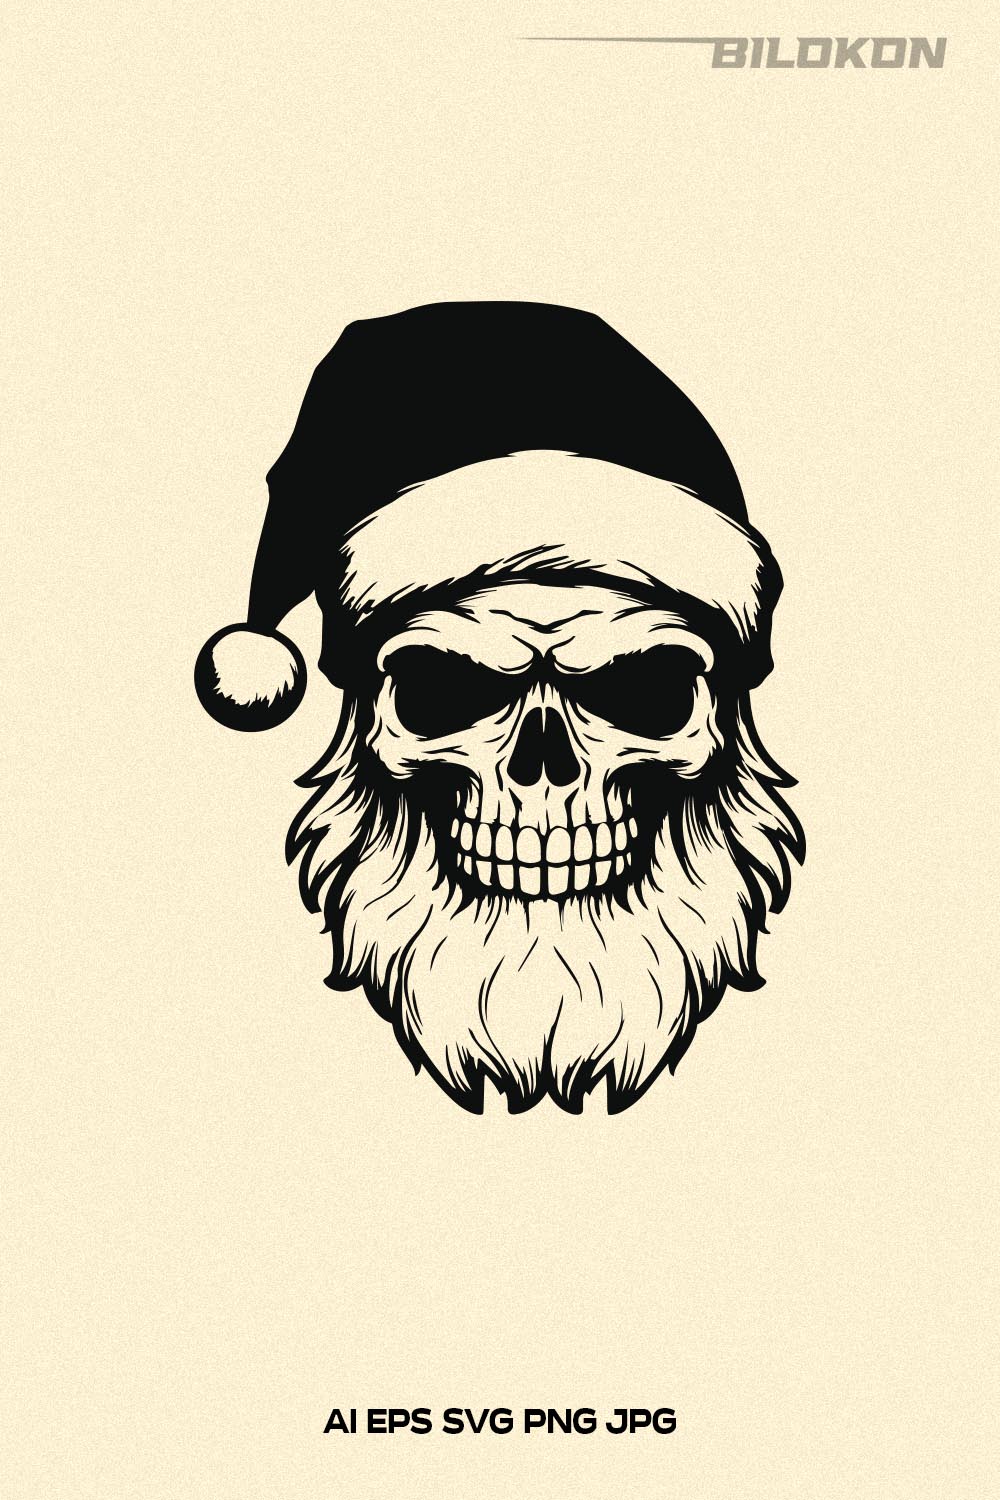 Santa Claus in Skull face, Skull in santa hat SVG Vector pinterest preview image.